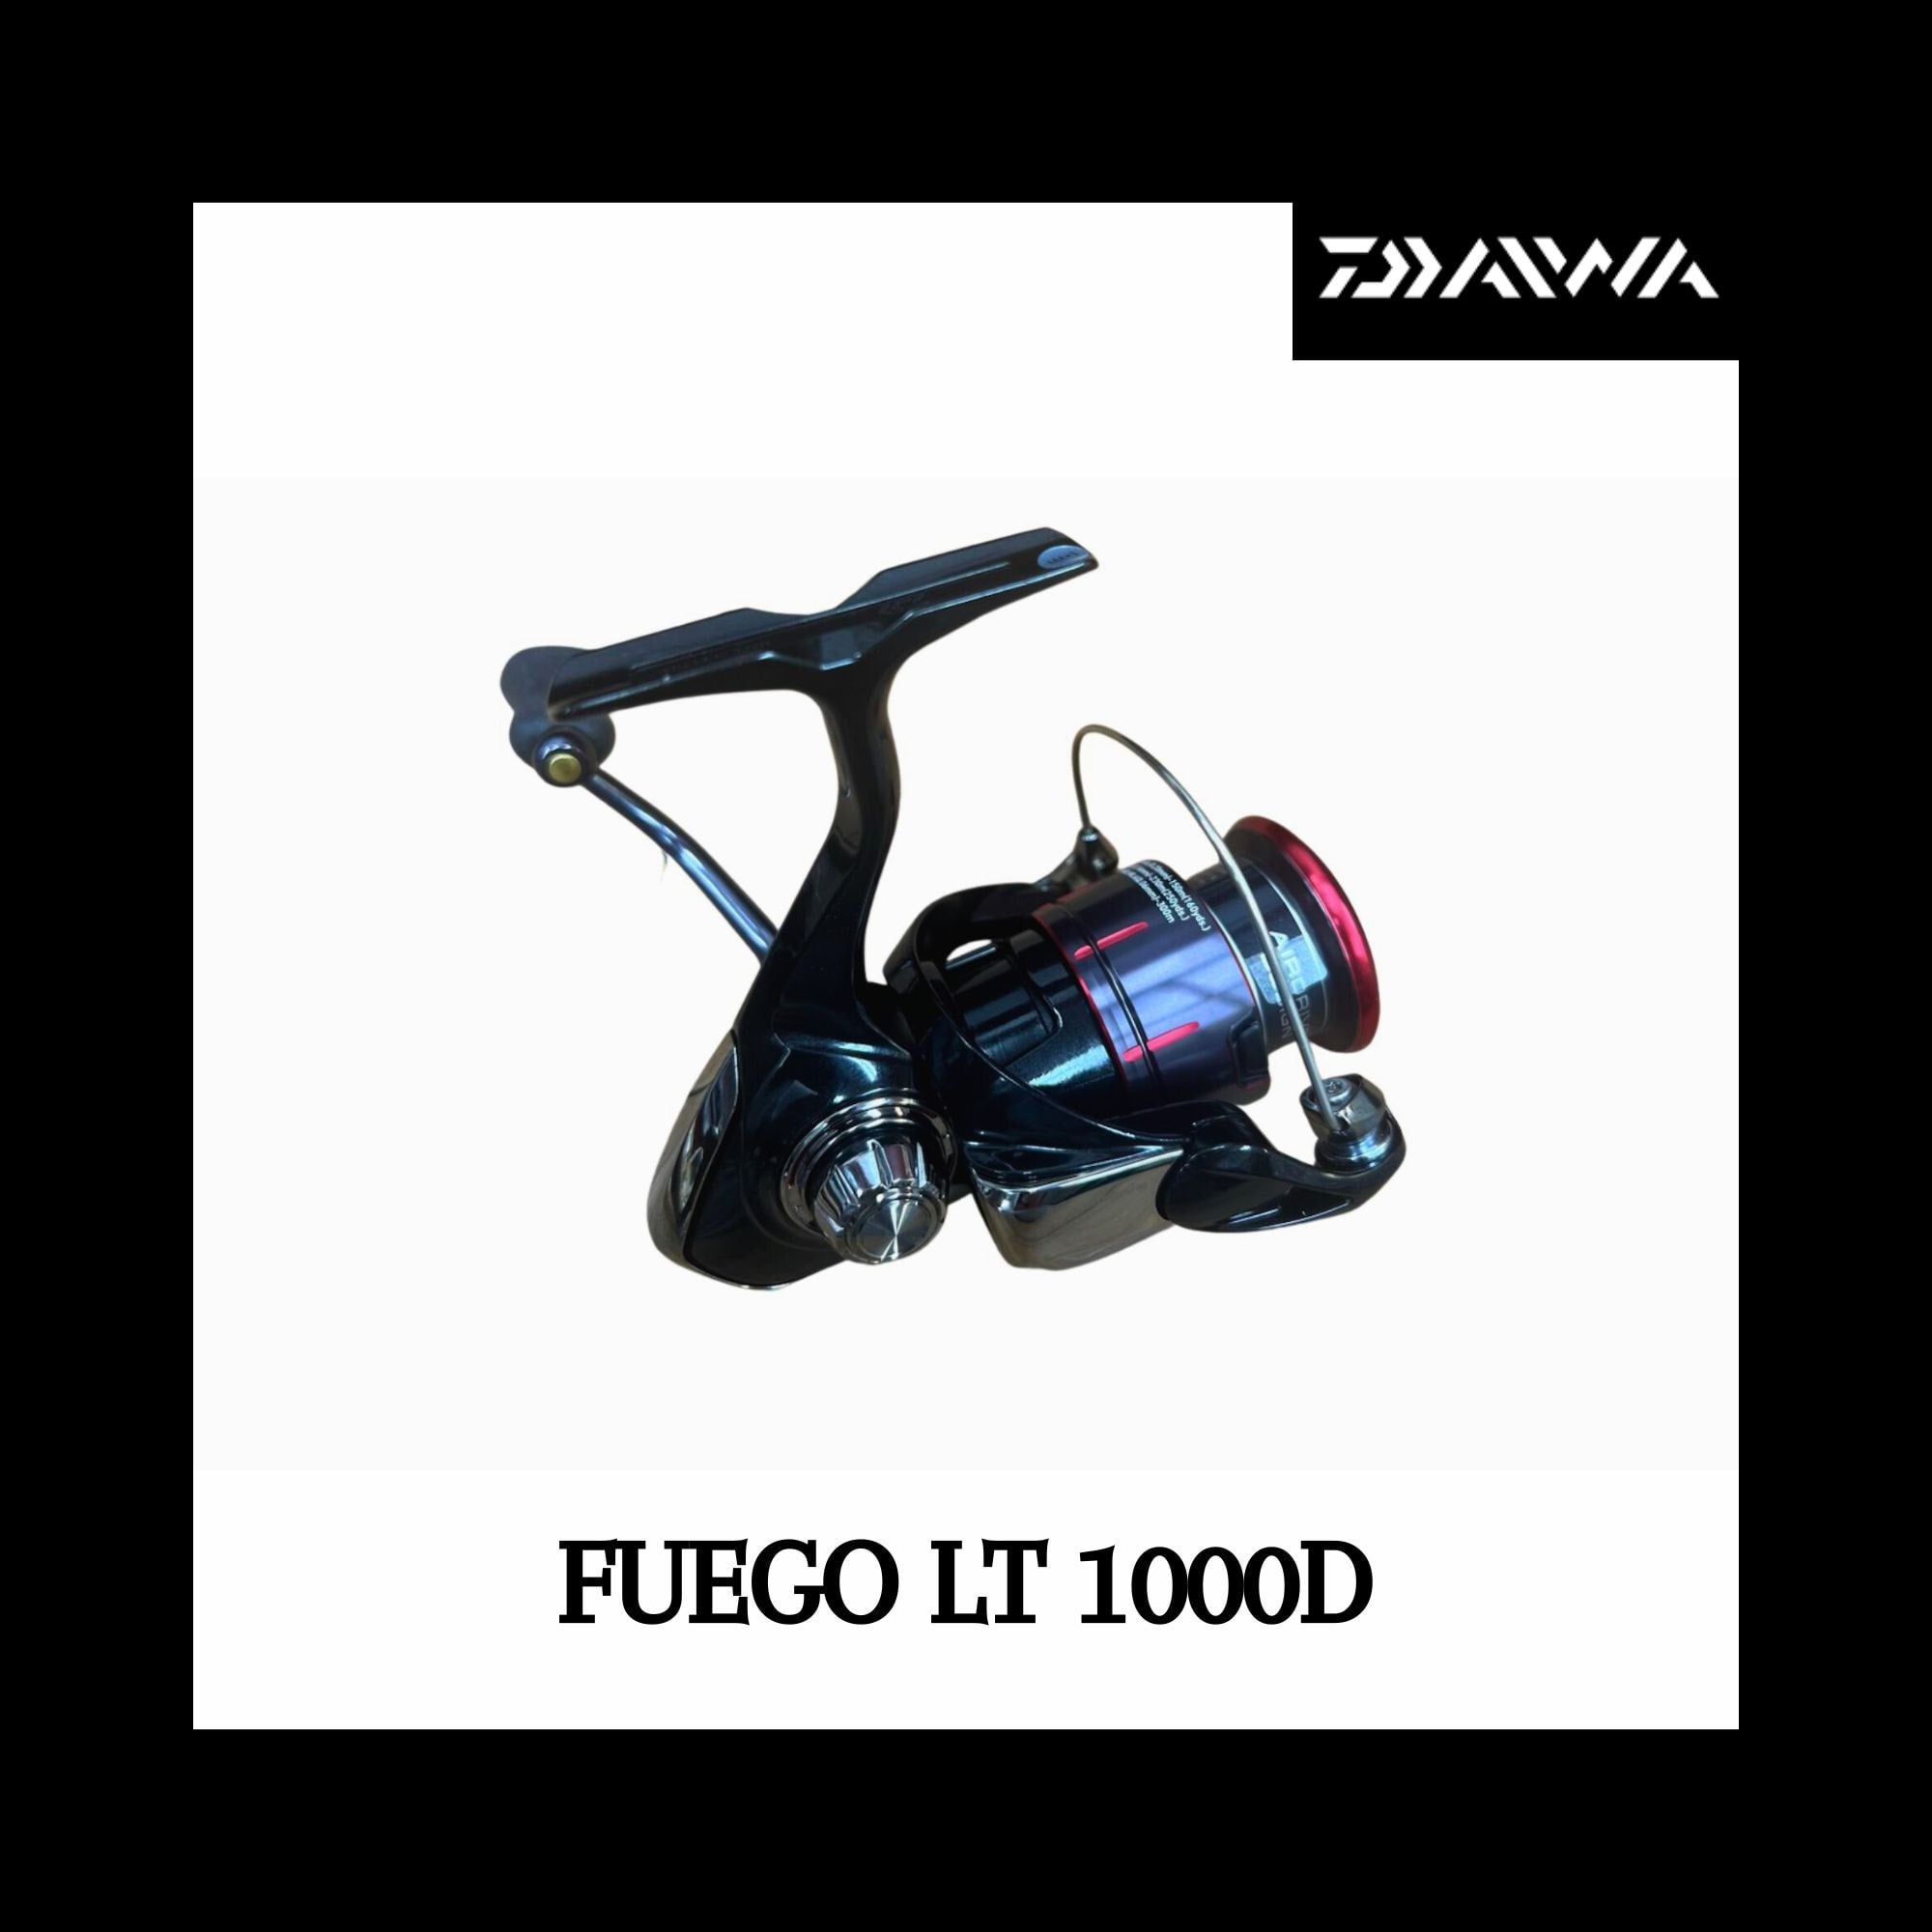 Fuego LT 1000D Spinning Fishing Reel, DAIWA